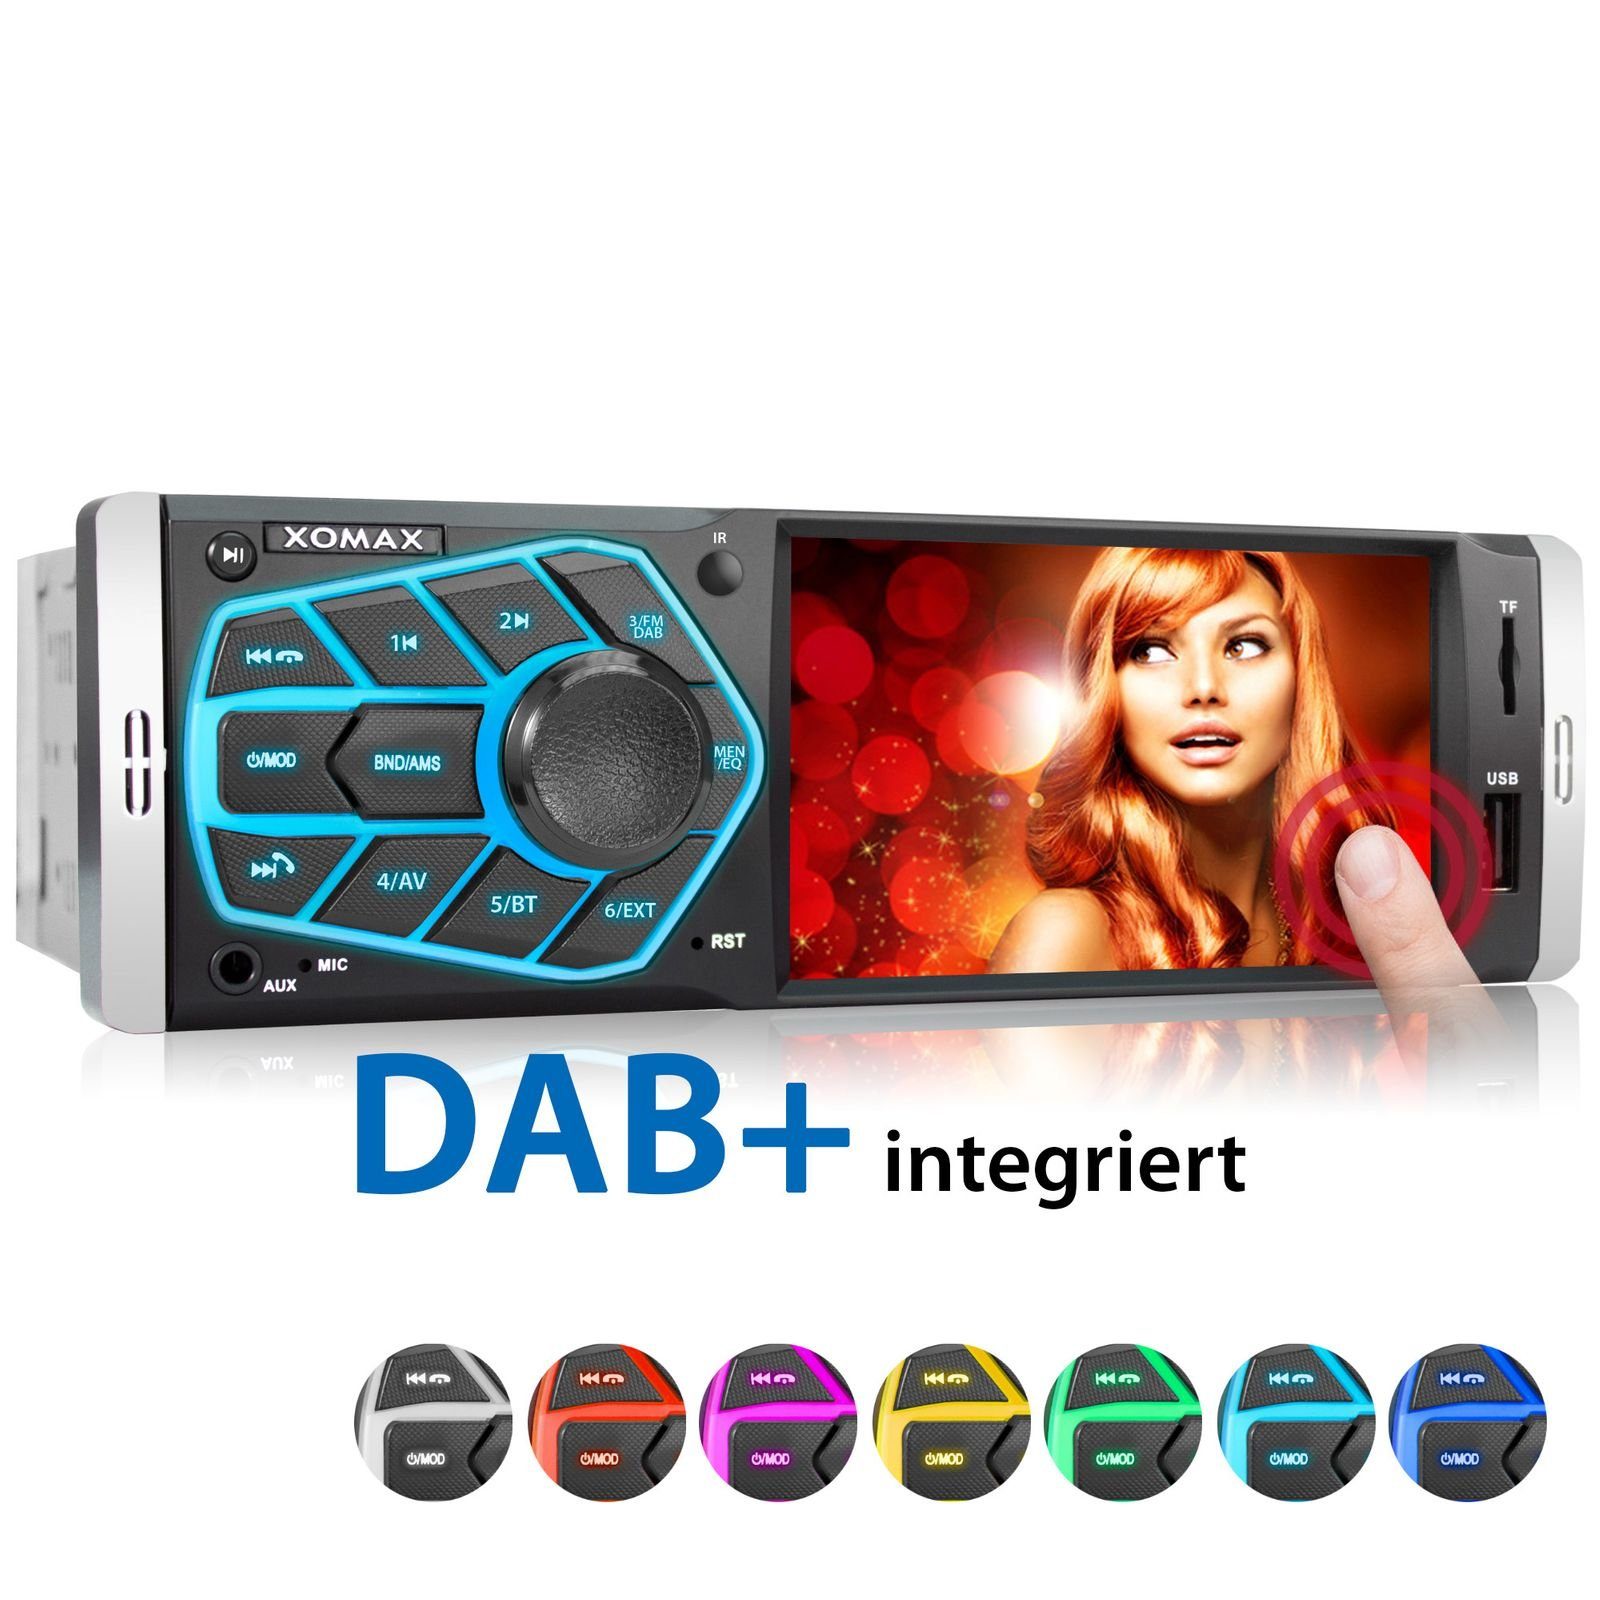 XOMAX XM-V418 Autoradio mit DAB plus Touchscreen Bildschirm Bluetooth 1 DIN Autoradio